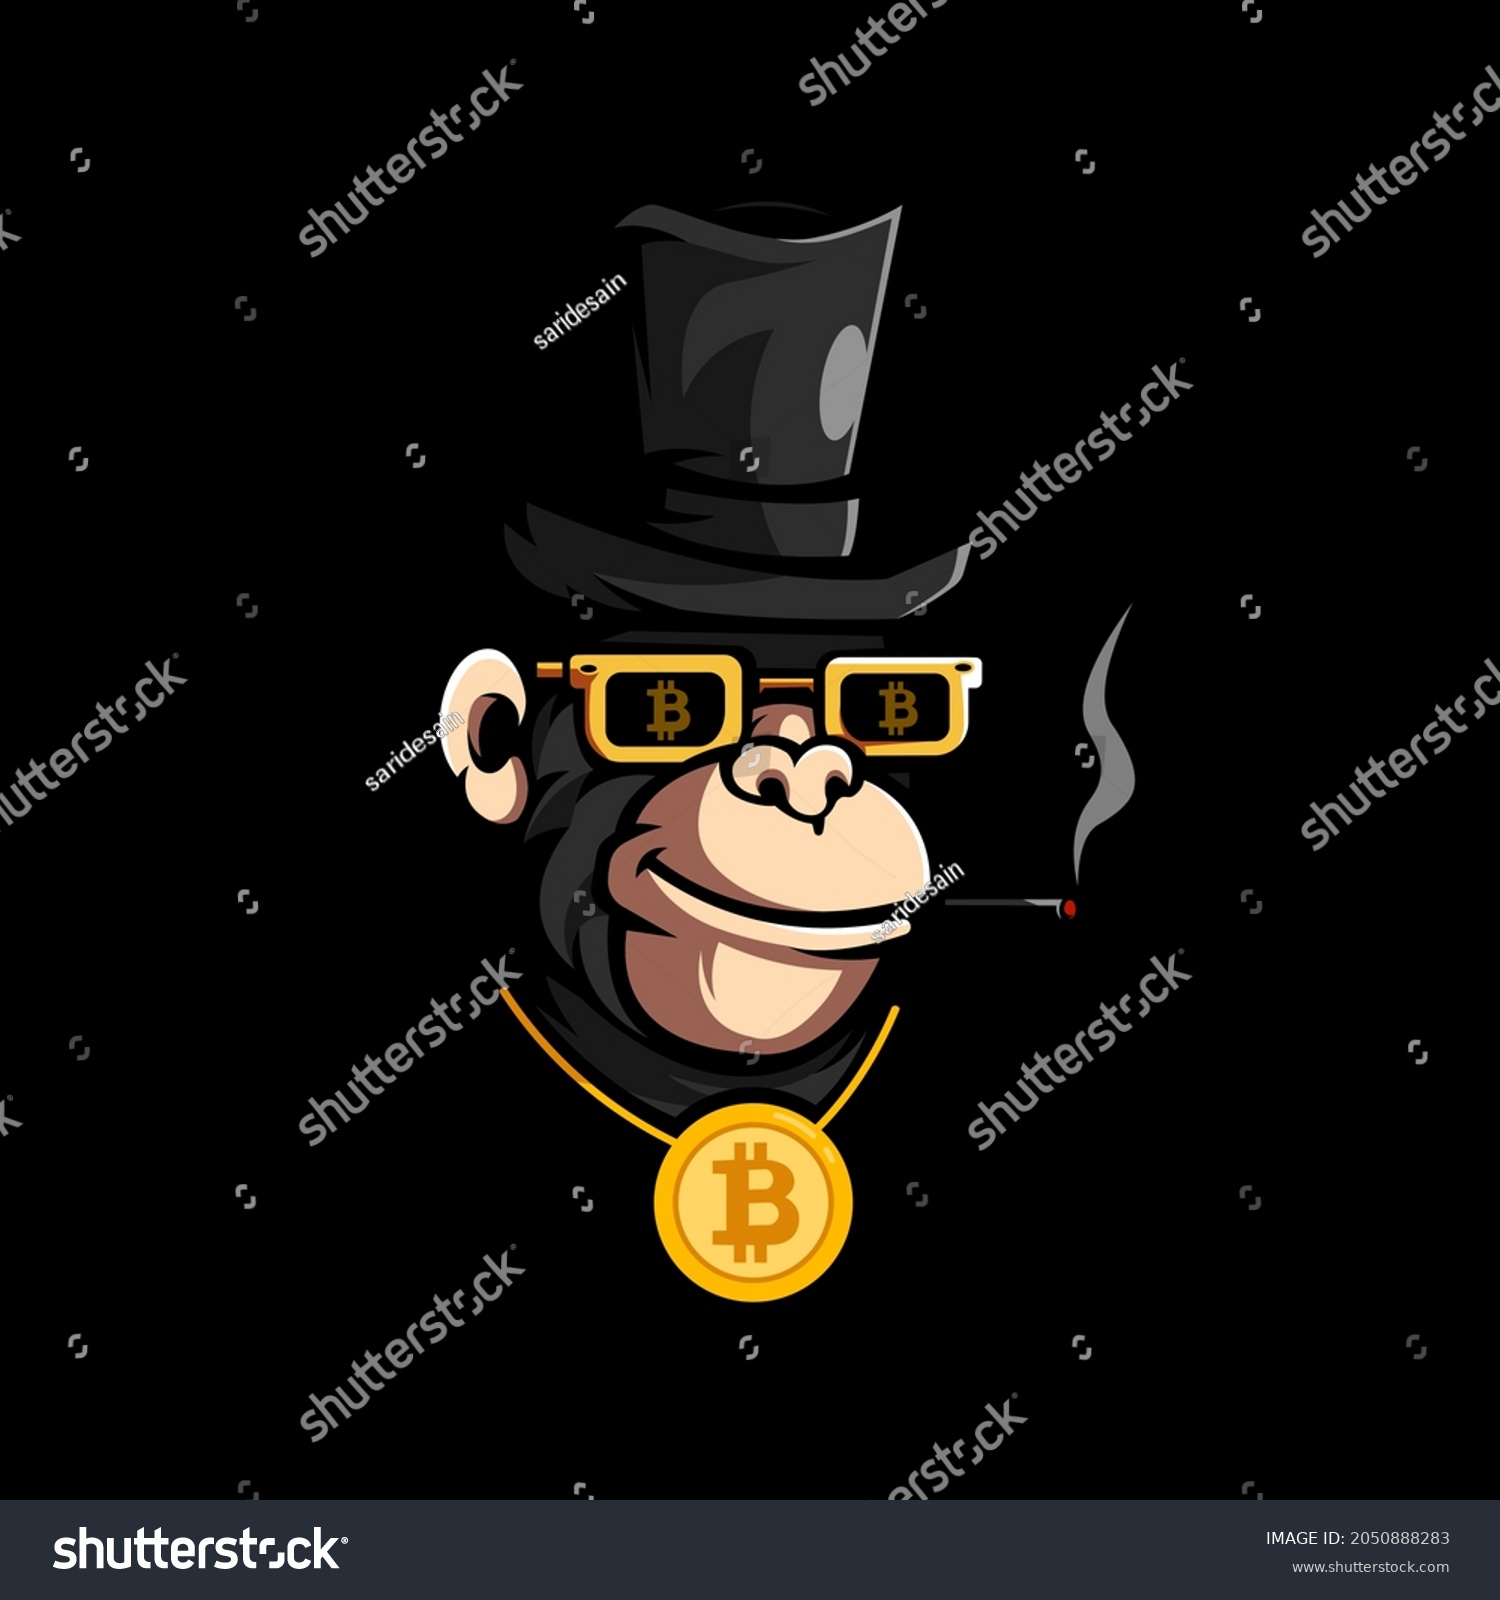 SVG of rich gorilla wearing bitcoin necklace while smoking mascot logo design illustration vector svg